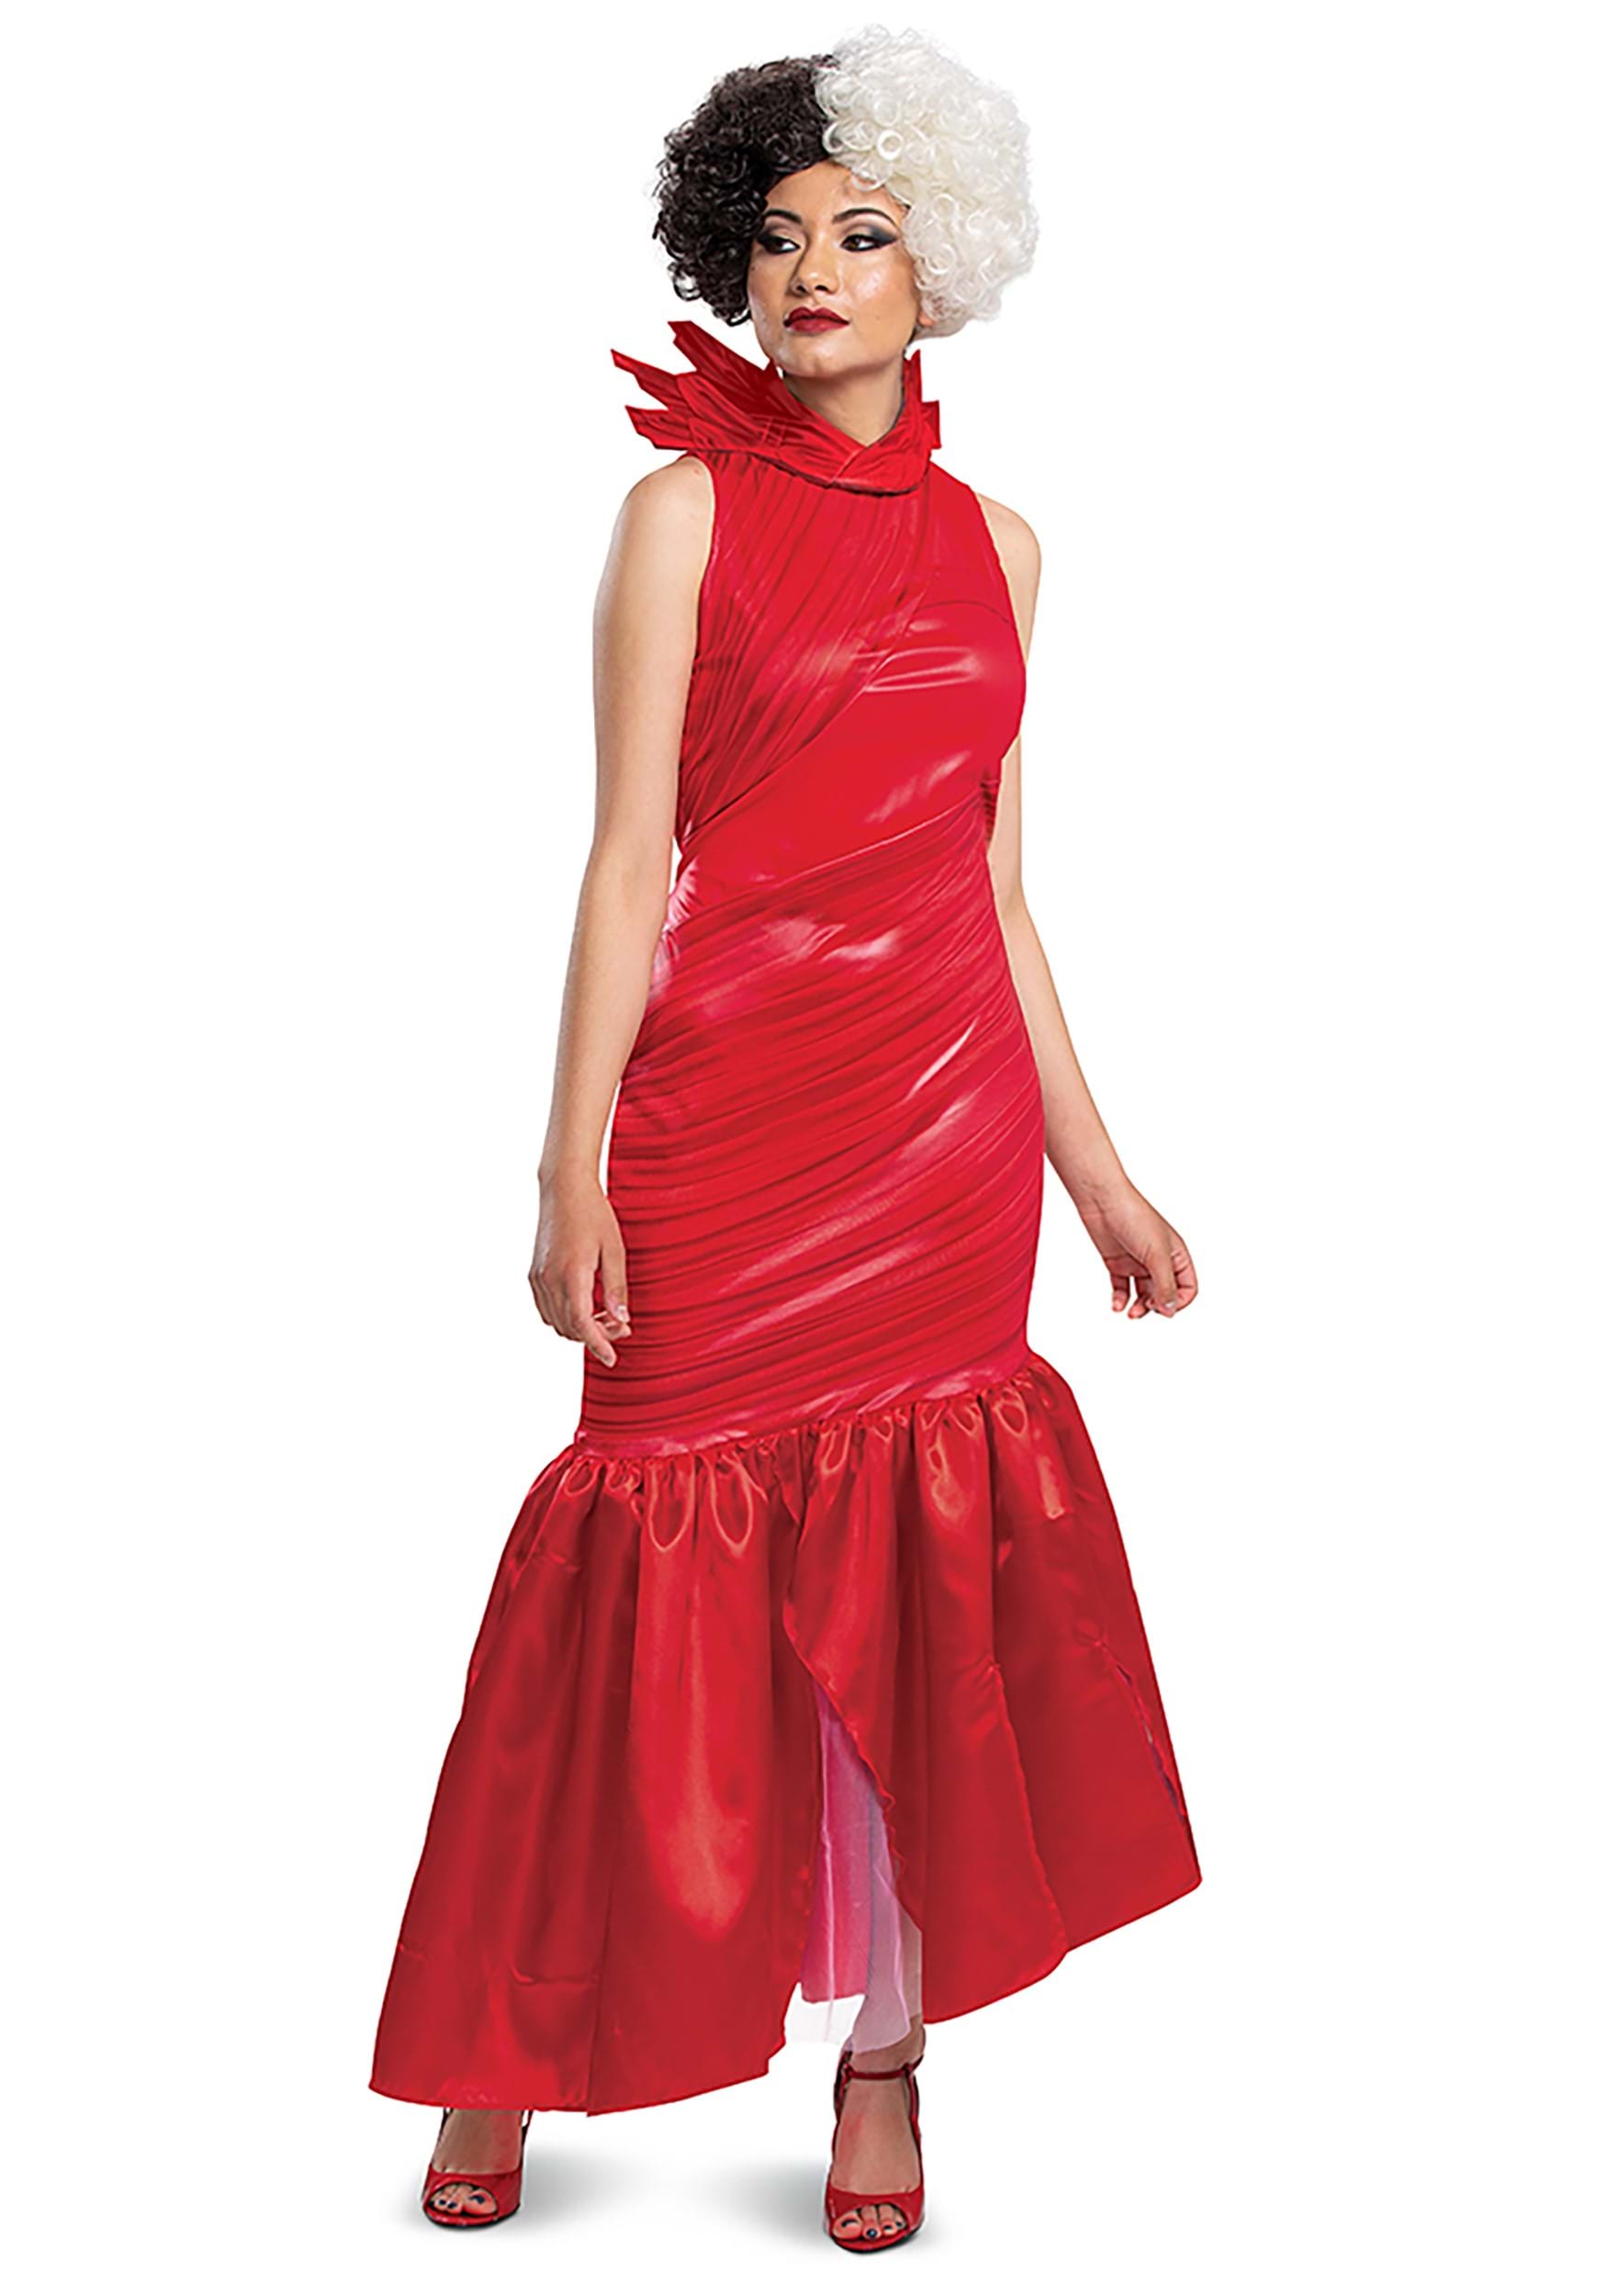 cruella red dress